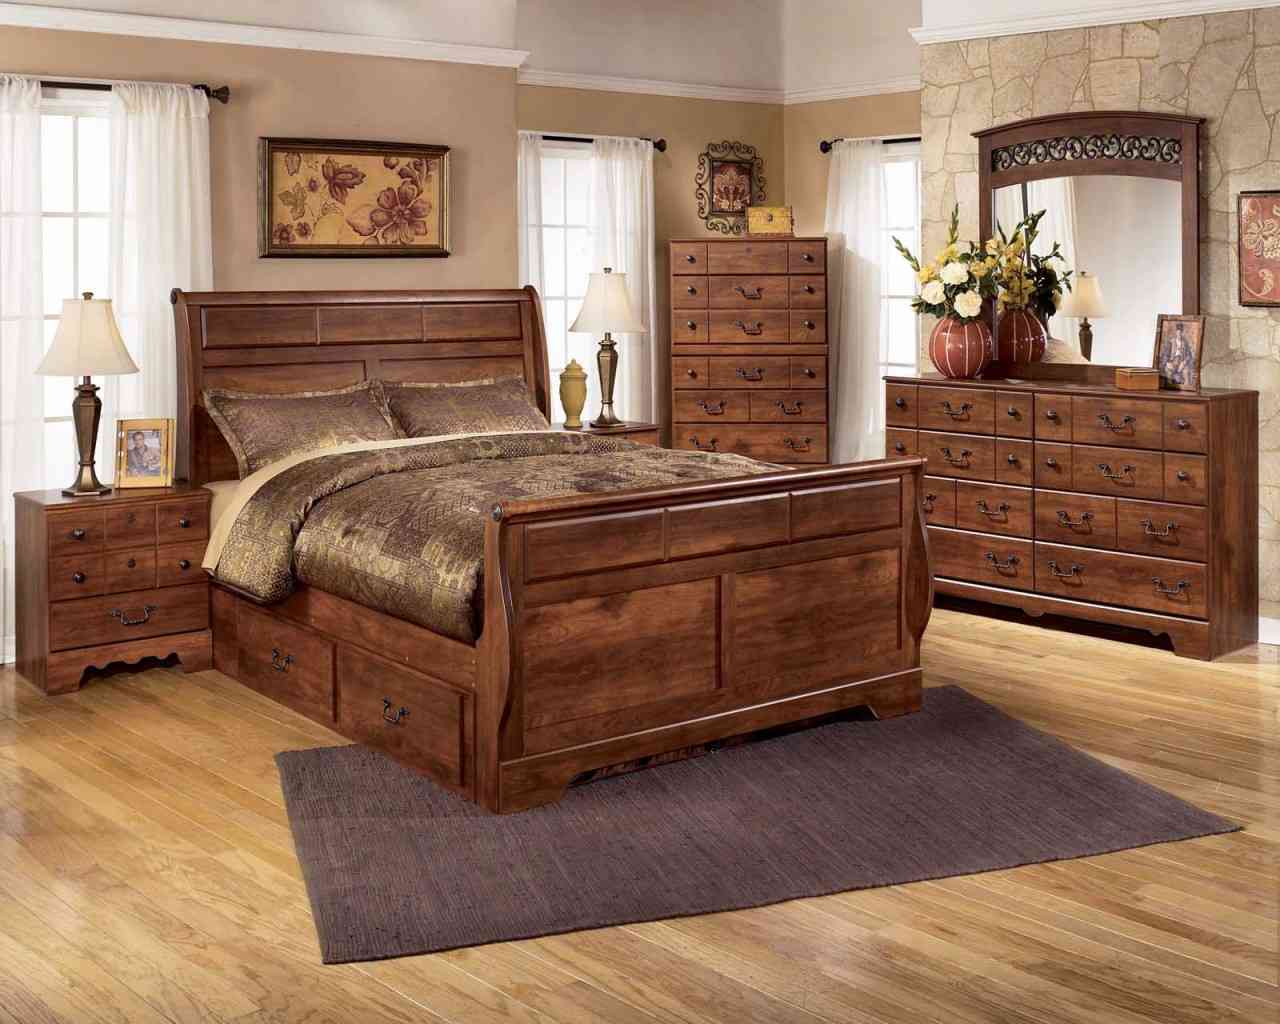 Great Bedroom Sets Designs